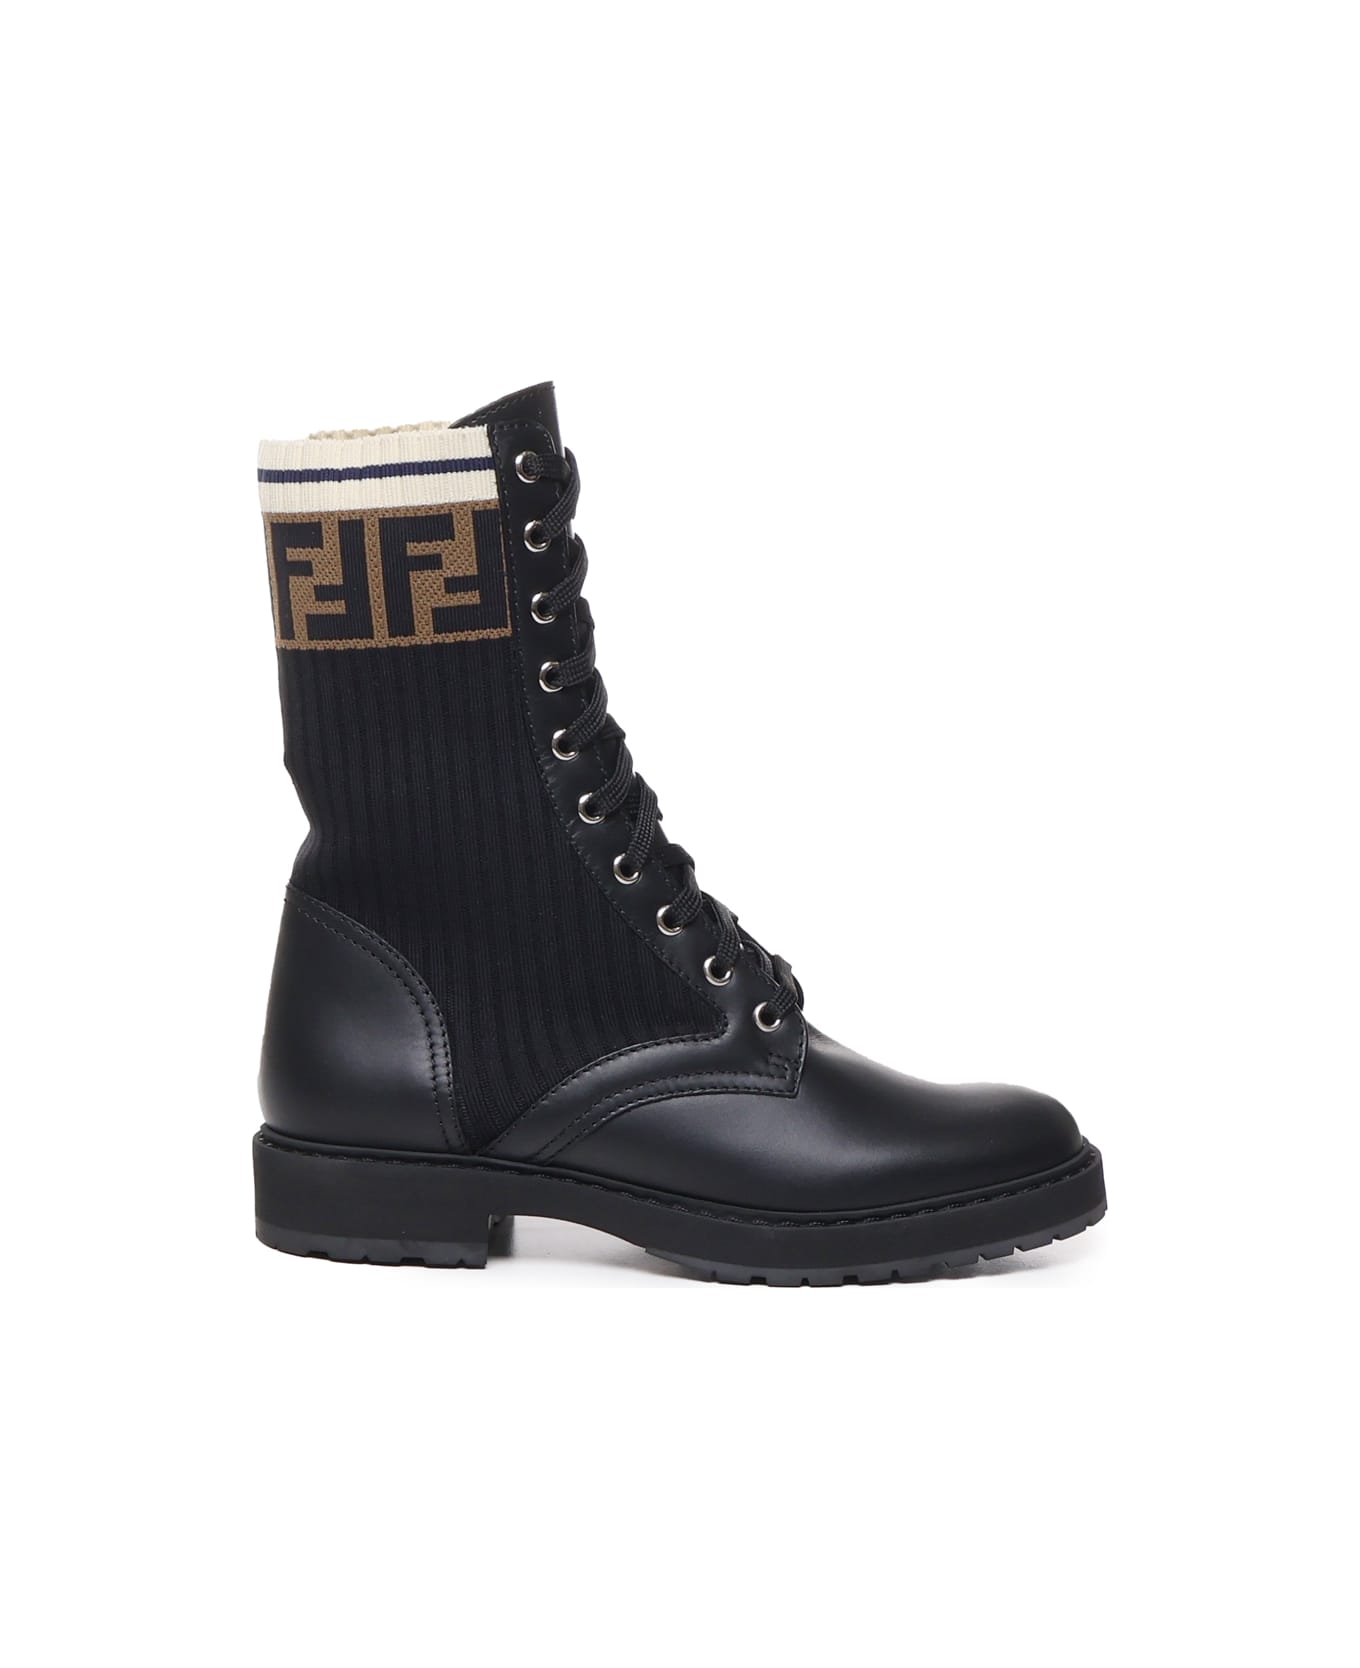 Fendi Leather And Mesh Biker Boots With Ff Monogram - Nero/tab.nero marino ブーツ